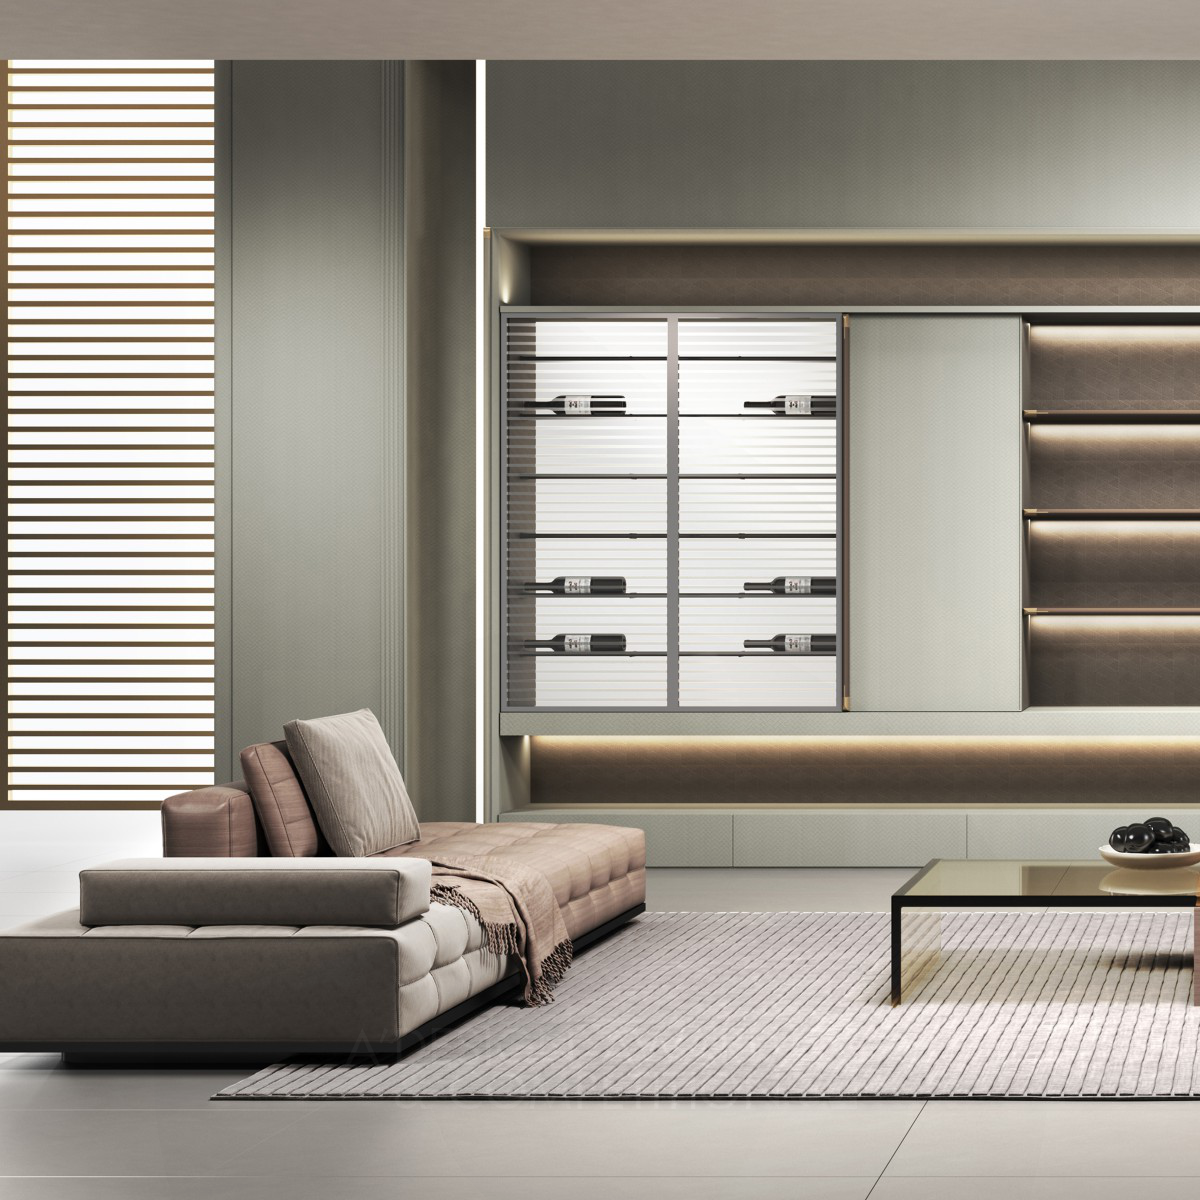 OPPÔLIA wins Bronze at the prestigious A' Furniture Design Award with Patti Custom Cabinet.